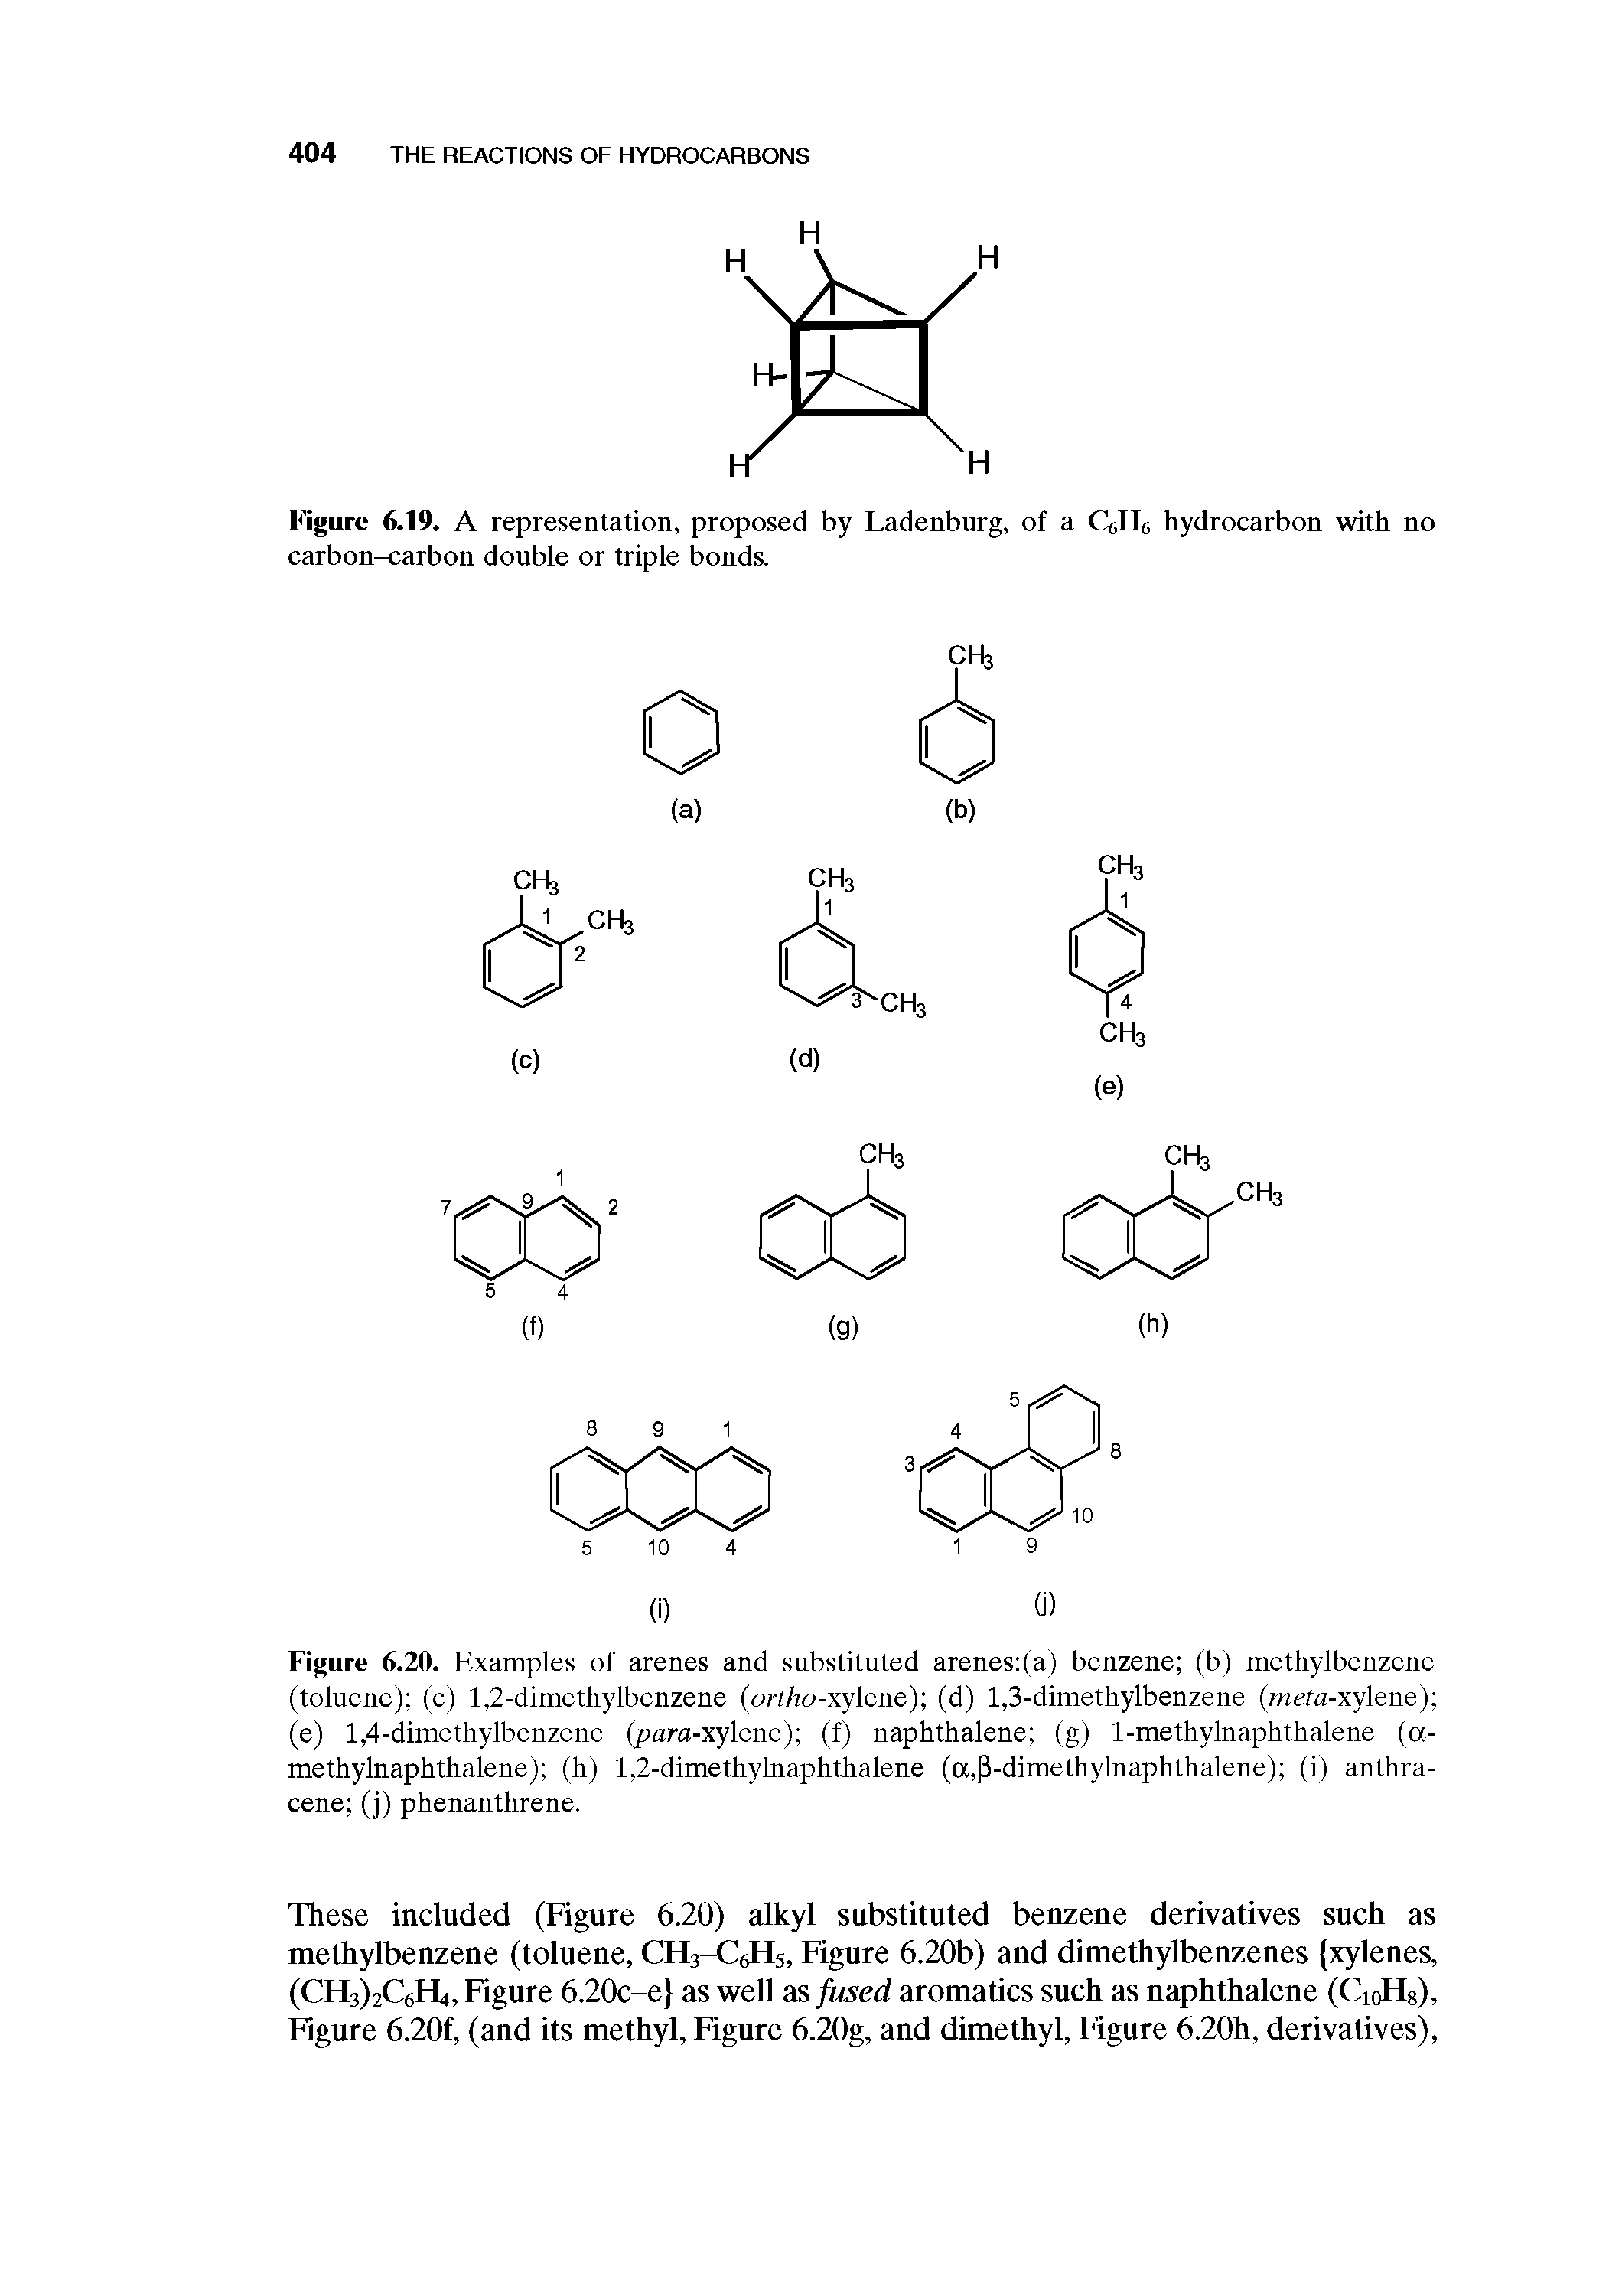 Figure 6.20. Examples of arenes and substituted arenes (a) benzene (b) methylbenzene (toluene) (c) 1,2-dime thy Ibenzene (orfho-xylene) (d) 1,3-dimethylbenzene (mefa-xylene) (e) 1,4-dimethylbenzene (para-xylene) (f) naphthalene (g) 1-methylnaphthalene (a-methylnaphthalene) (h) 1,2-dime thy Inaphthalene (a, 3-dimethylnaphthalene) (i) anthracene (j) phenanthrene.